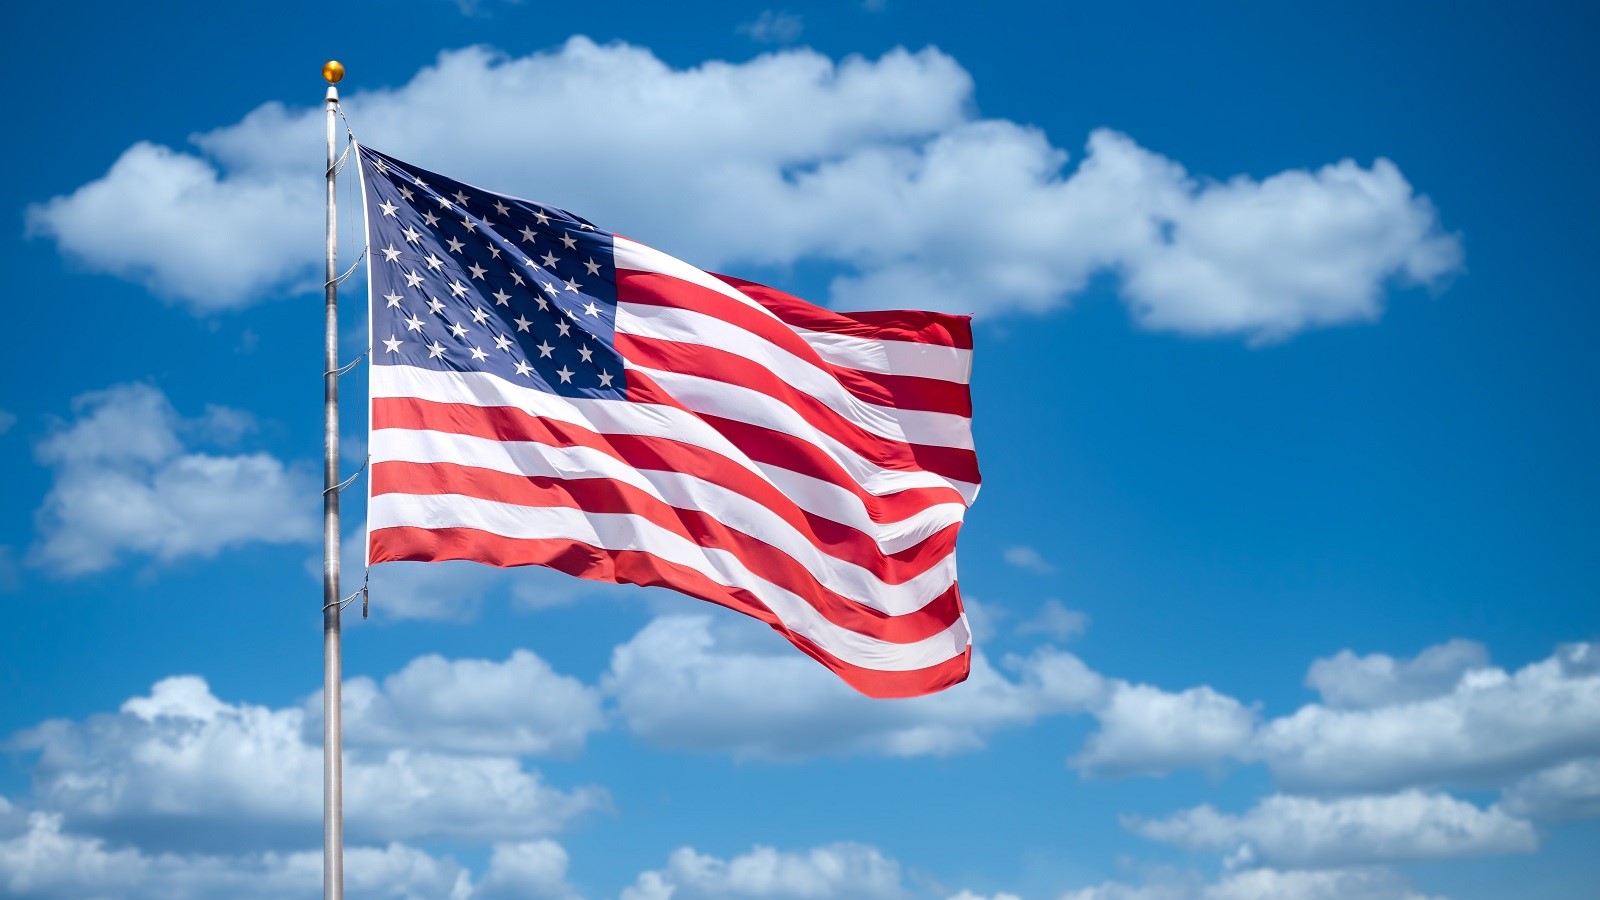 USA flag on blue sky